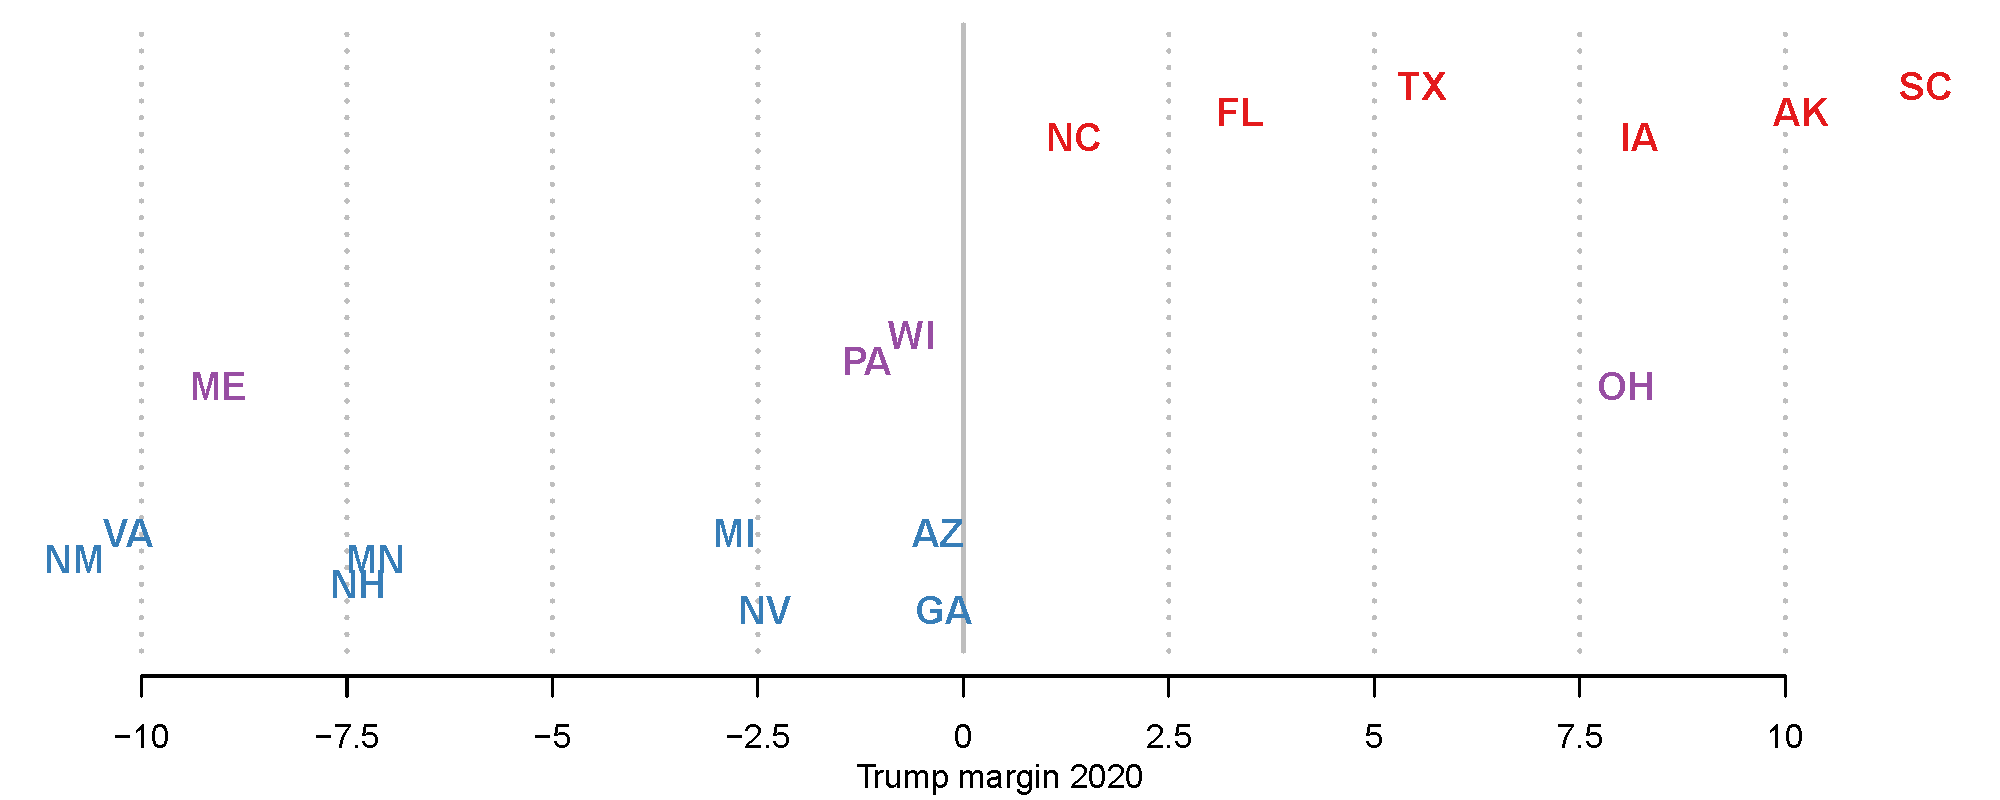 Senate seat alignment by 2020 presidential margin, close states